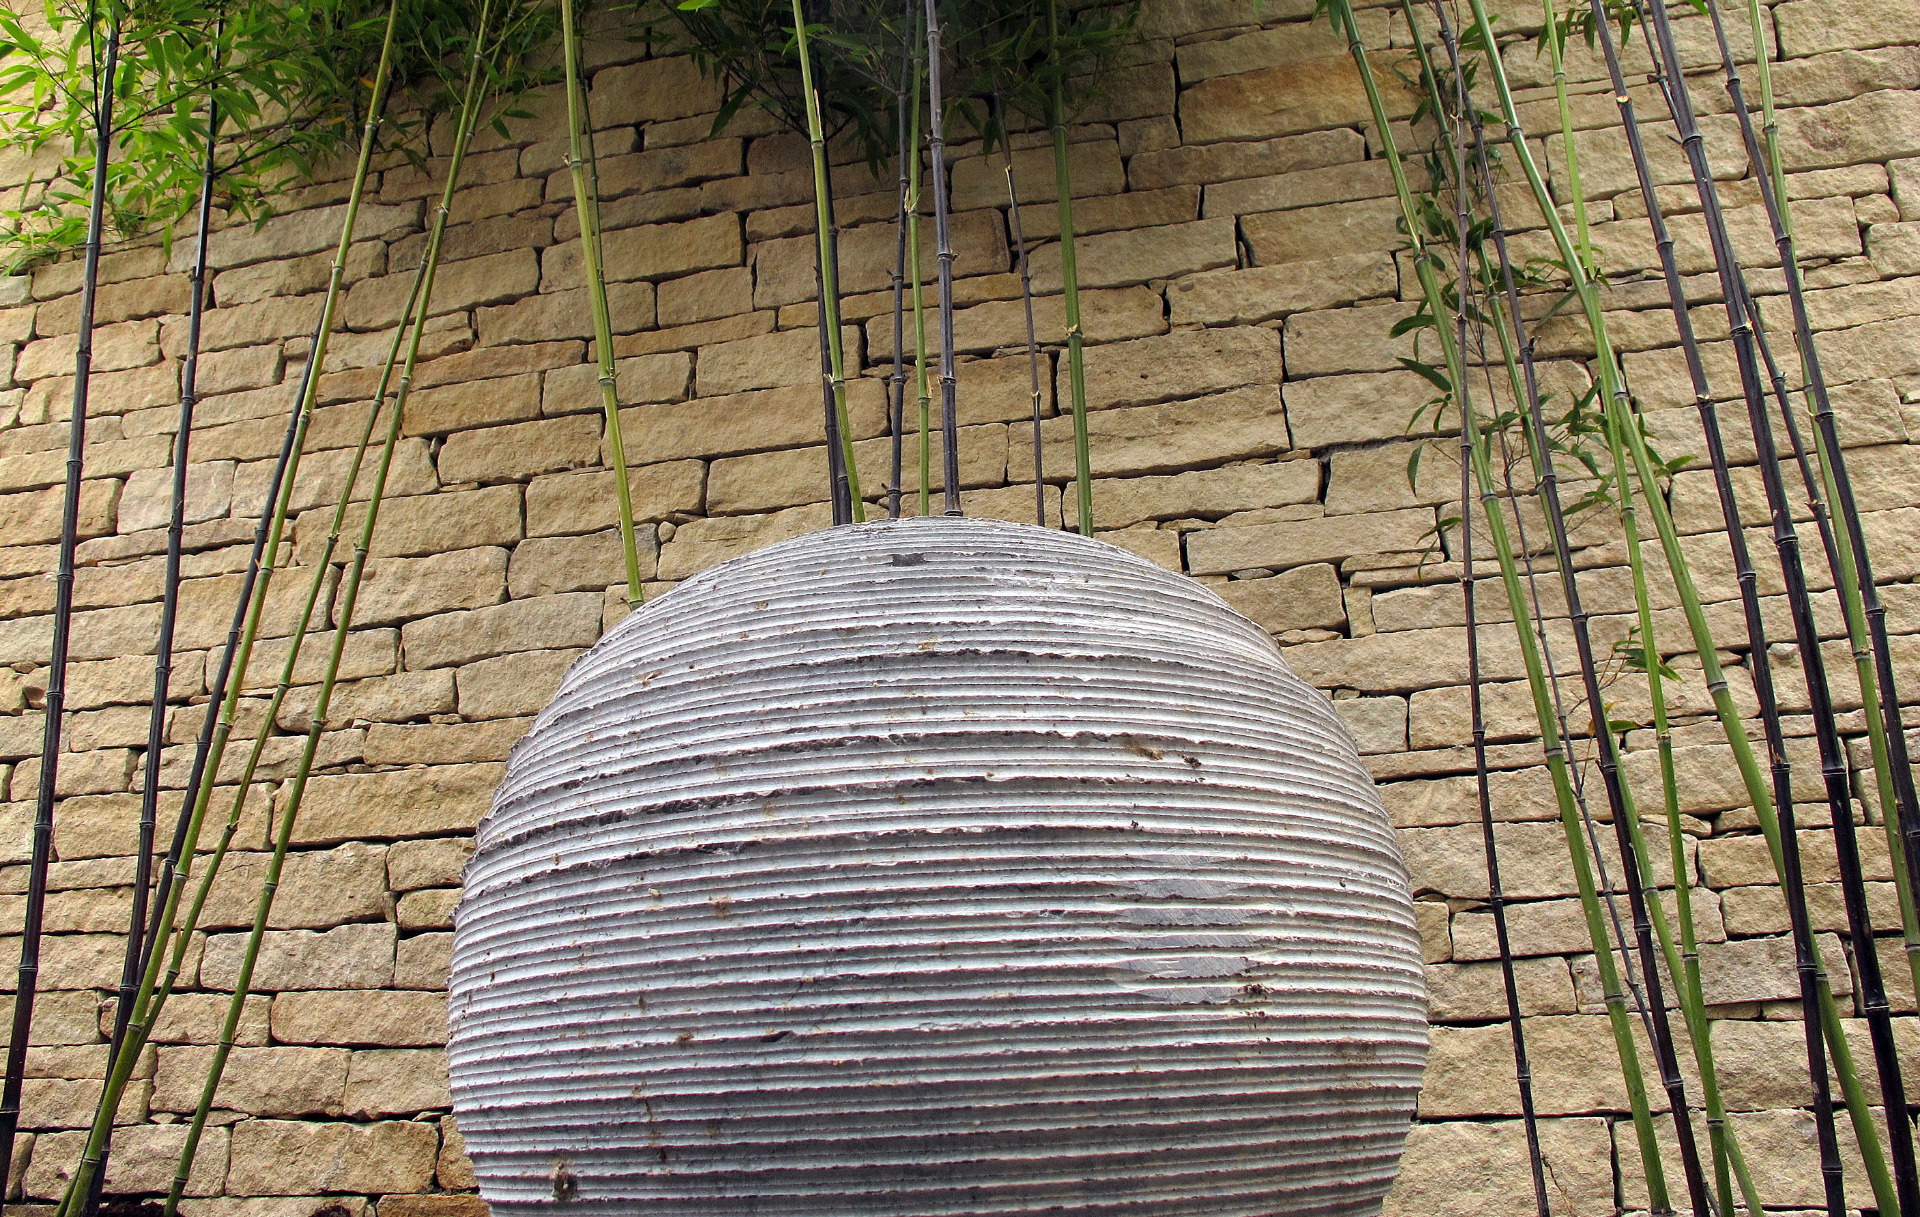 Granite Sphere Water Features - stunning running water displays, wonderful sound effects.